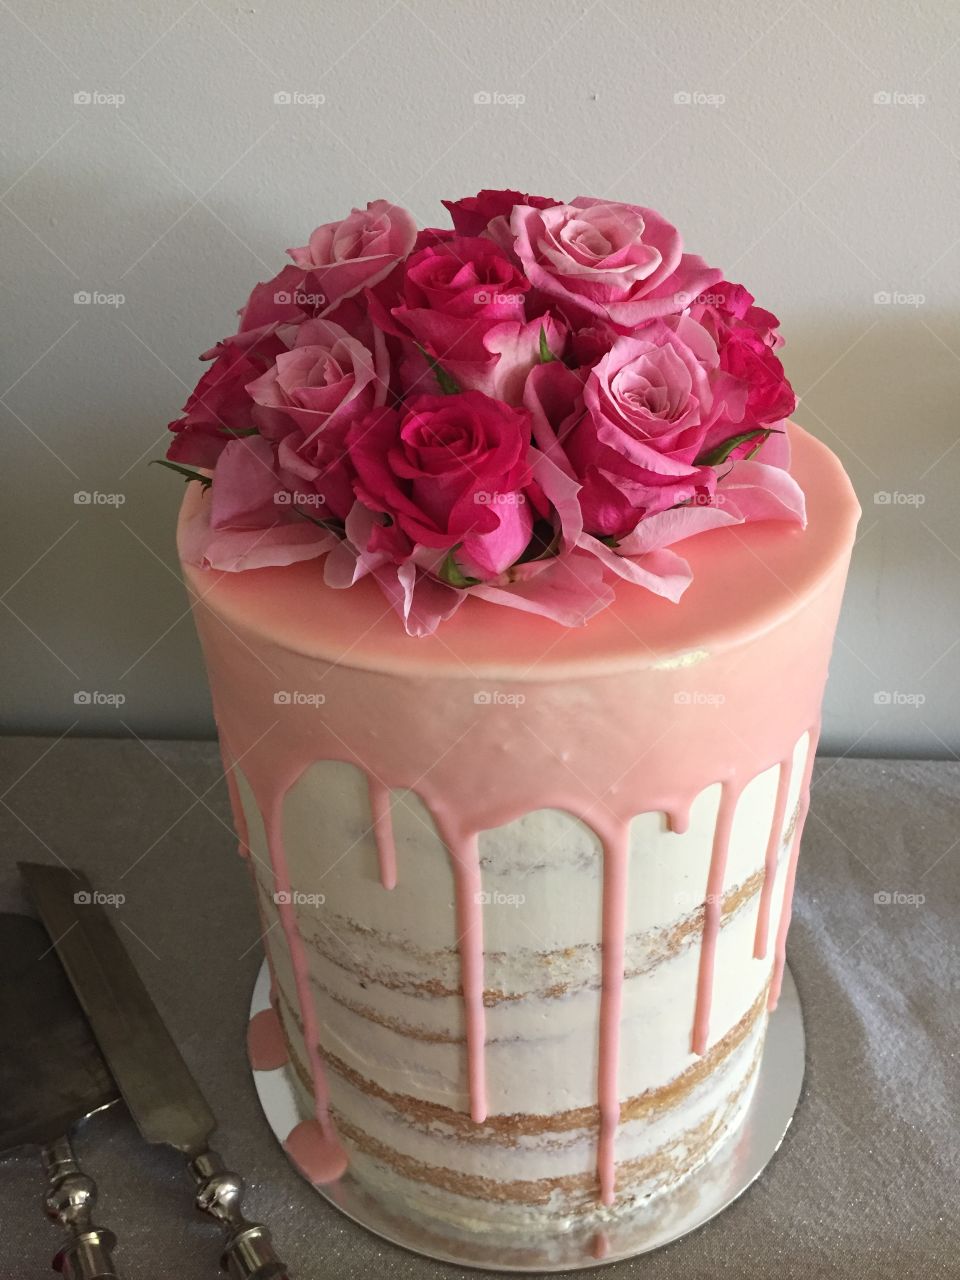 Close-up of pink cake